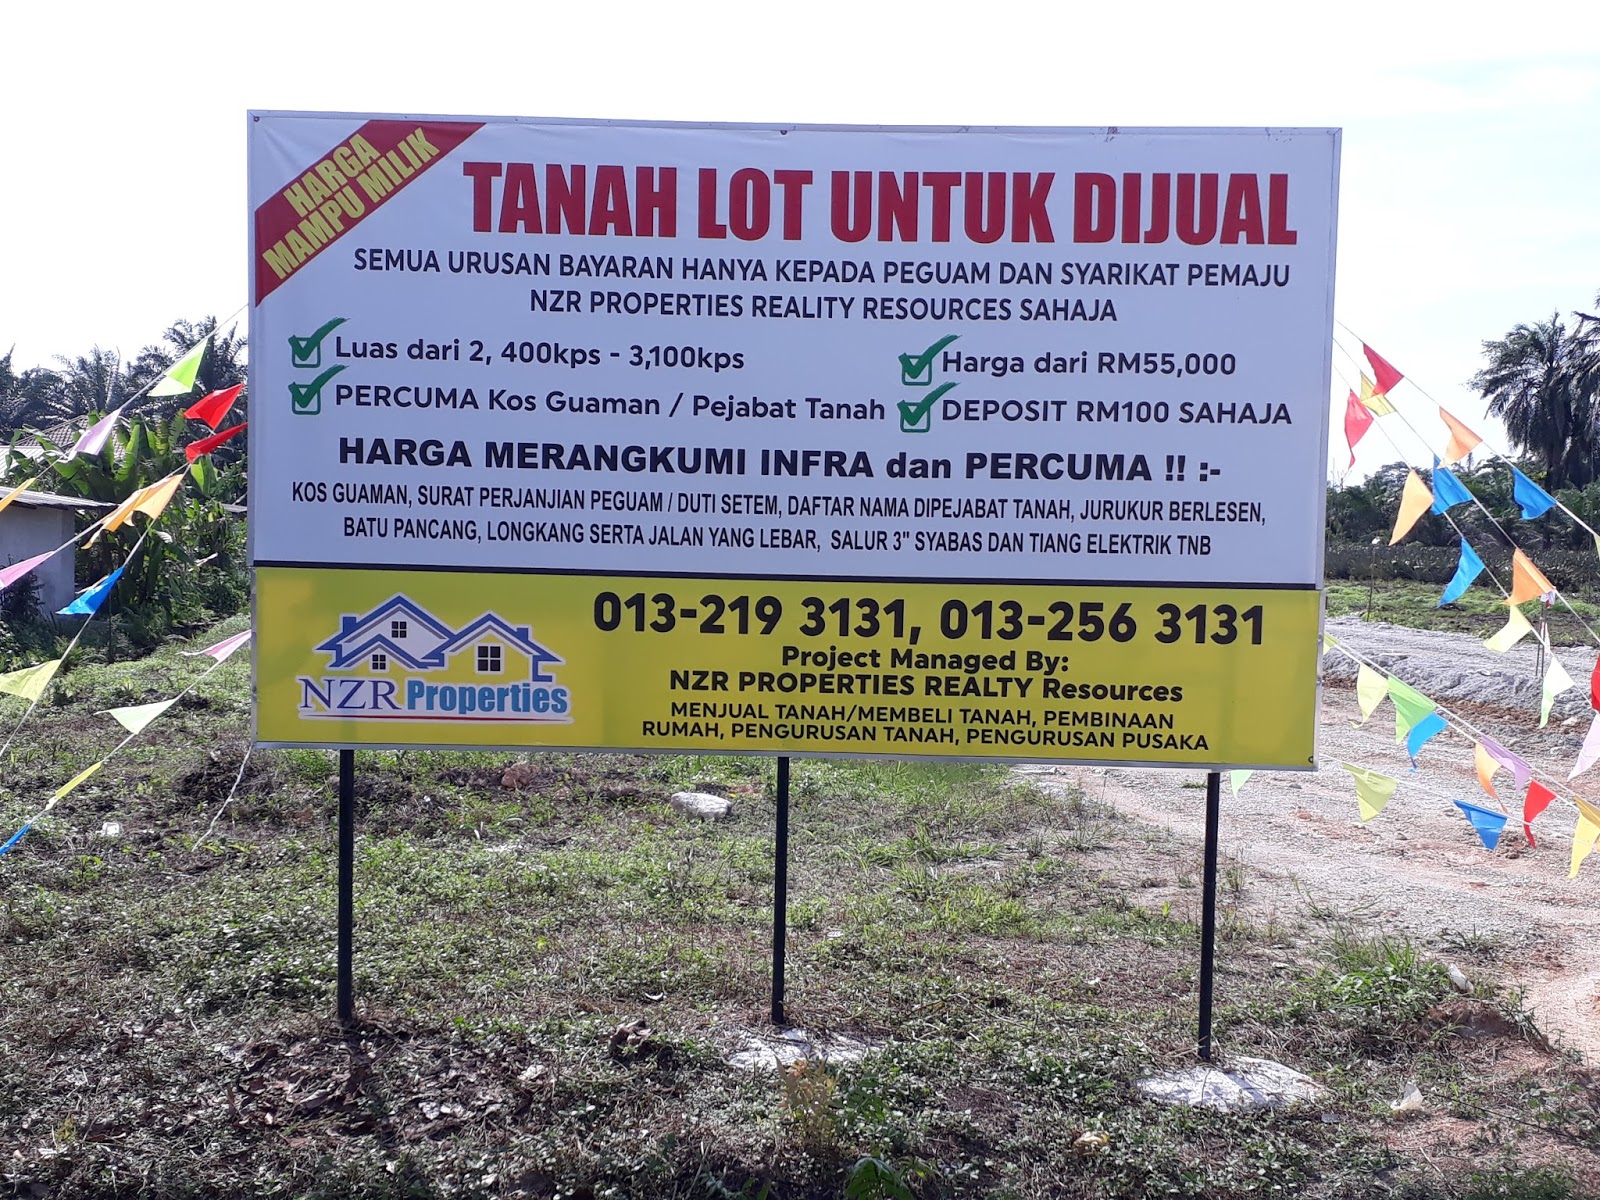 Tanah Lot Untuk Dijual Di Selangor 2020